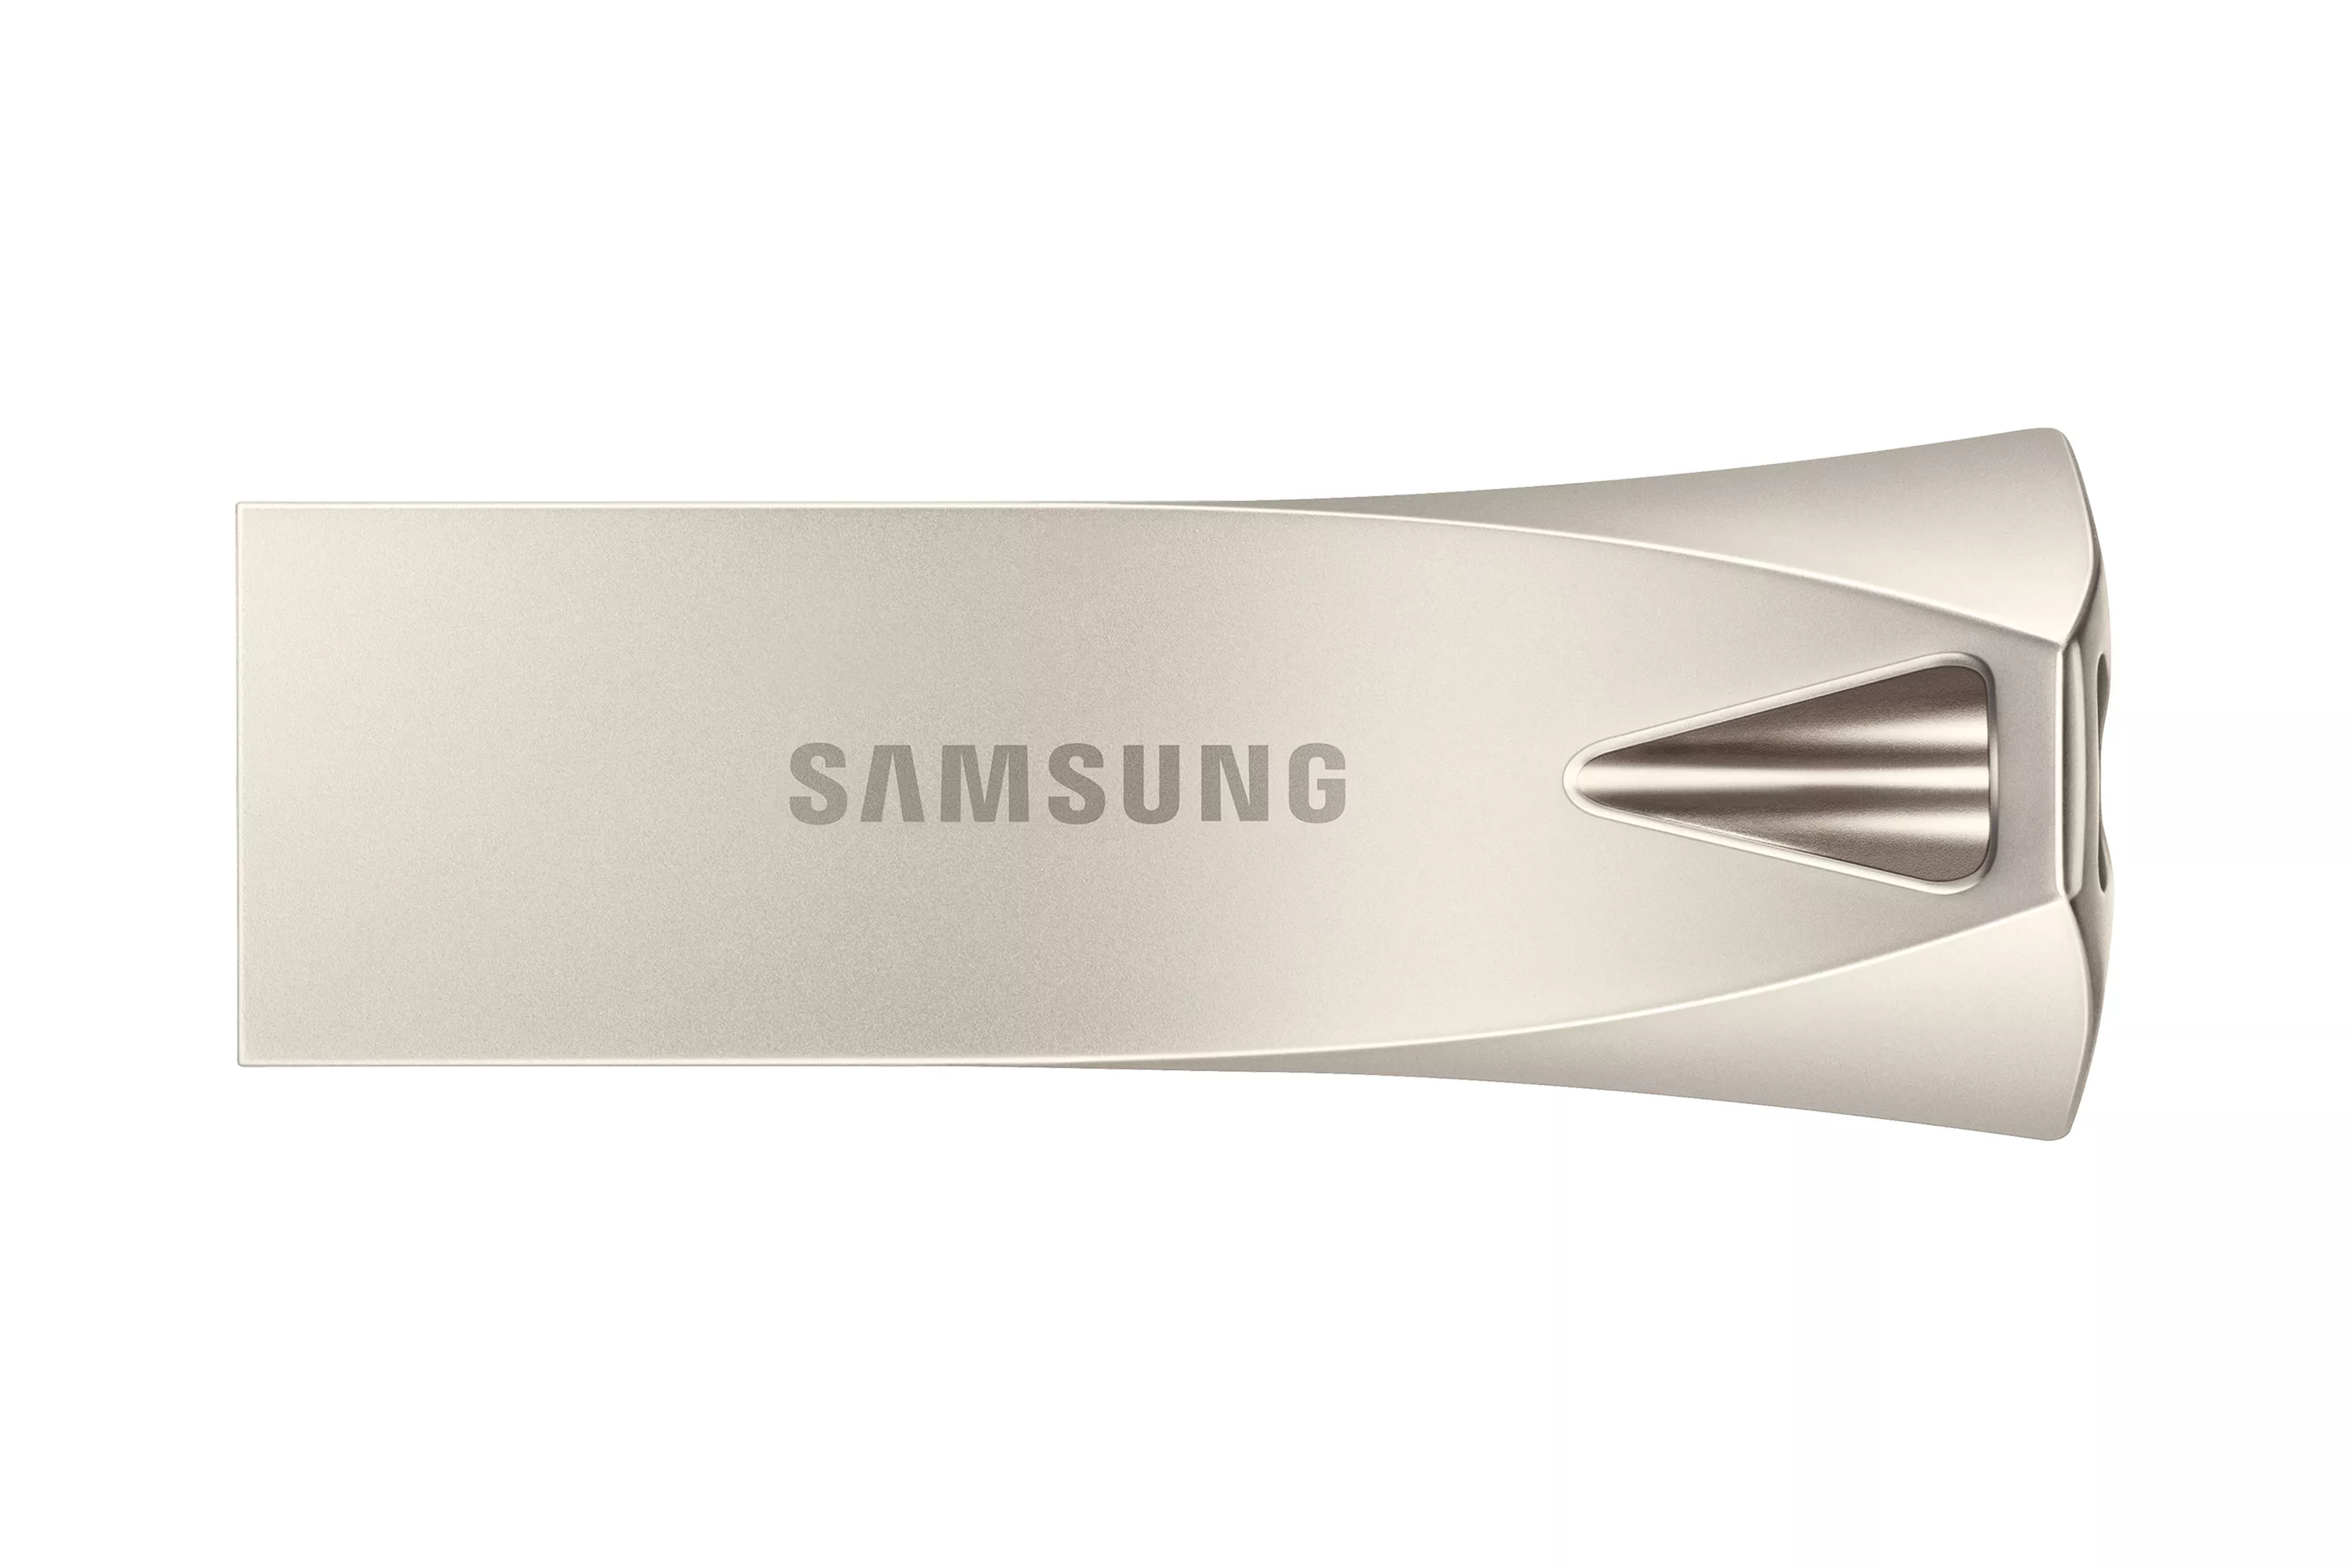 Achat SAMSUNG BAR PLUS 128Go USB 3.1 Champagne Silver au meilleur prix